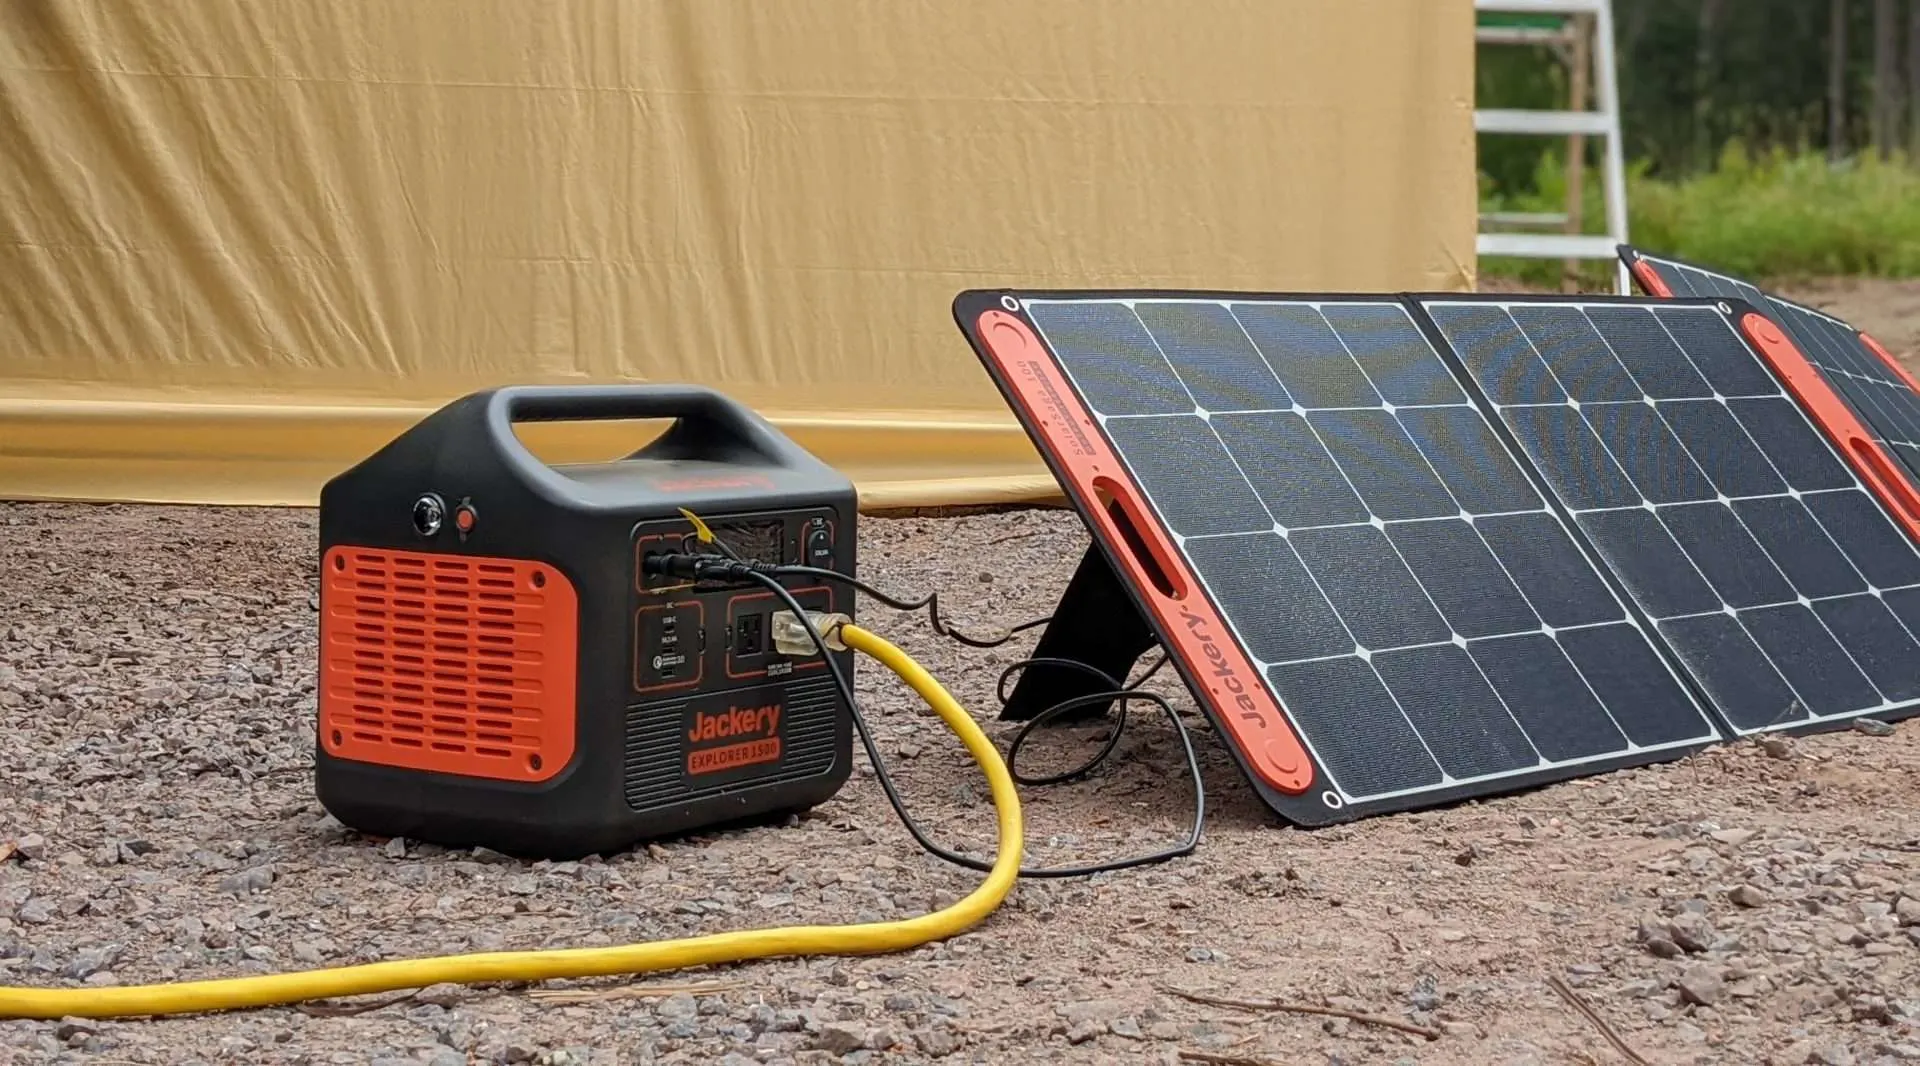 jackery solar generator setup at campsite